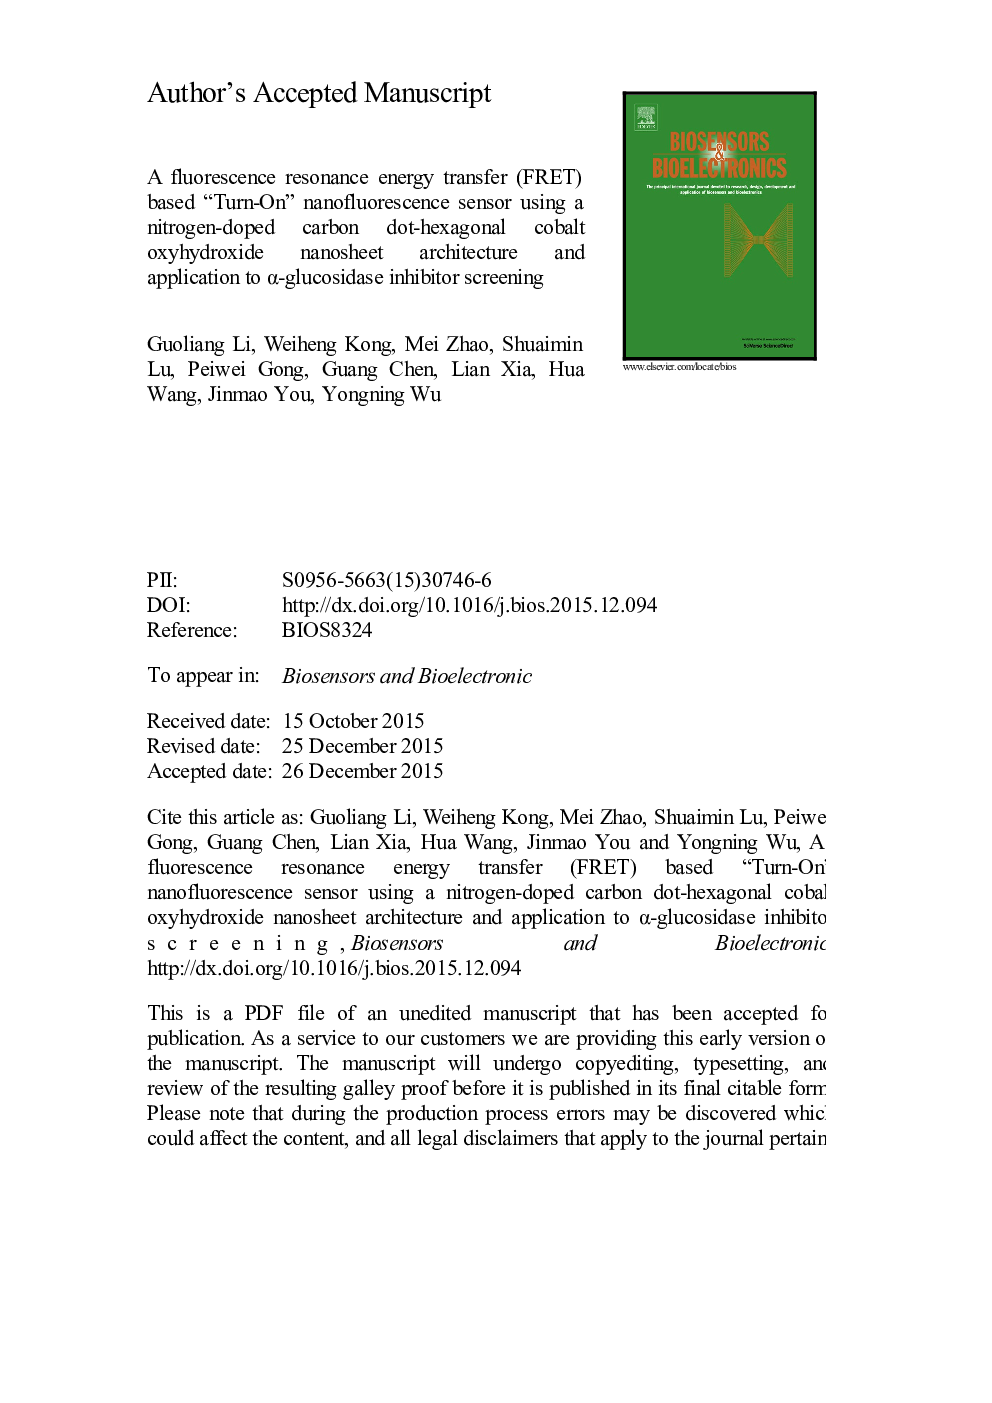 A fluorescence resonance energy transfer (FRET) based “Turn-On” nanofluorescence sensor using a nitrogen-doped carbon dot-hexagonal cobalt oxyhydroxide nanosheet architecture and application to Î±-glucosidase inhibitor screening